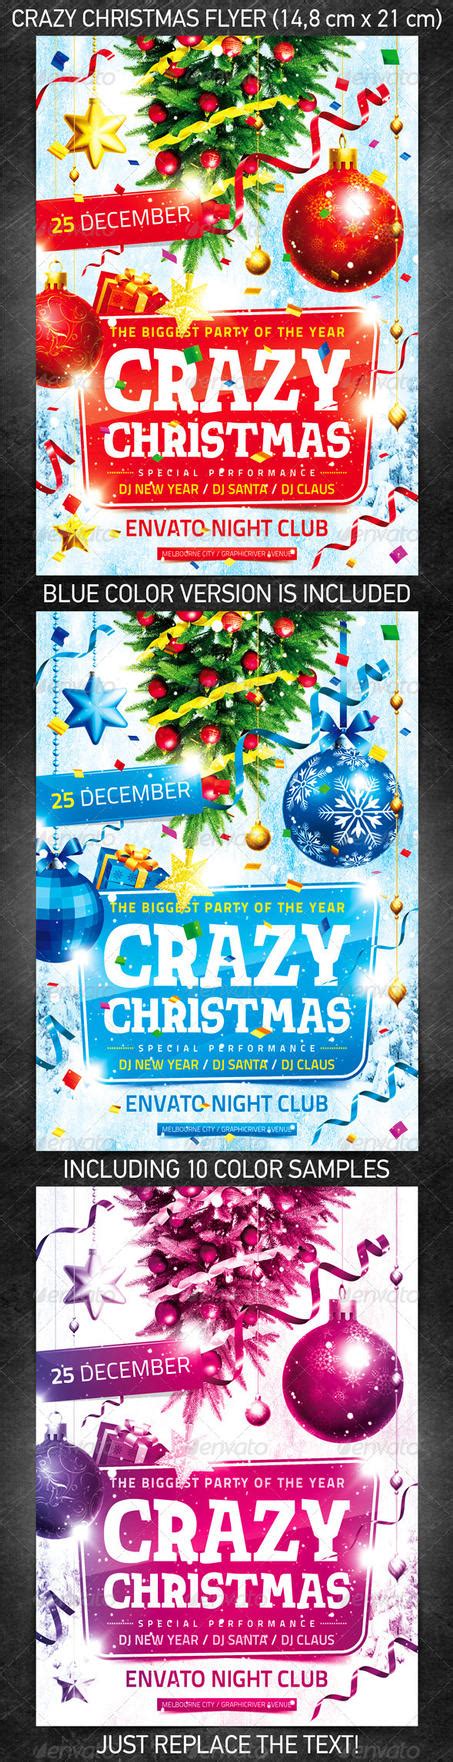 Crazy Christmas Flyer Psd Template By 4ustudio On Deviantart